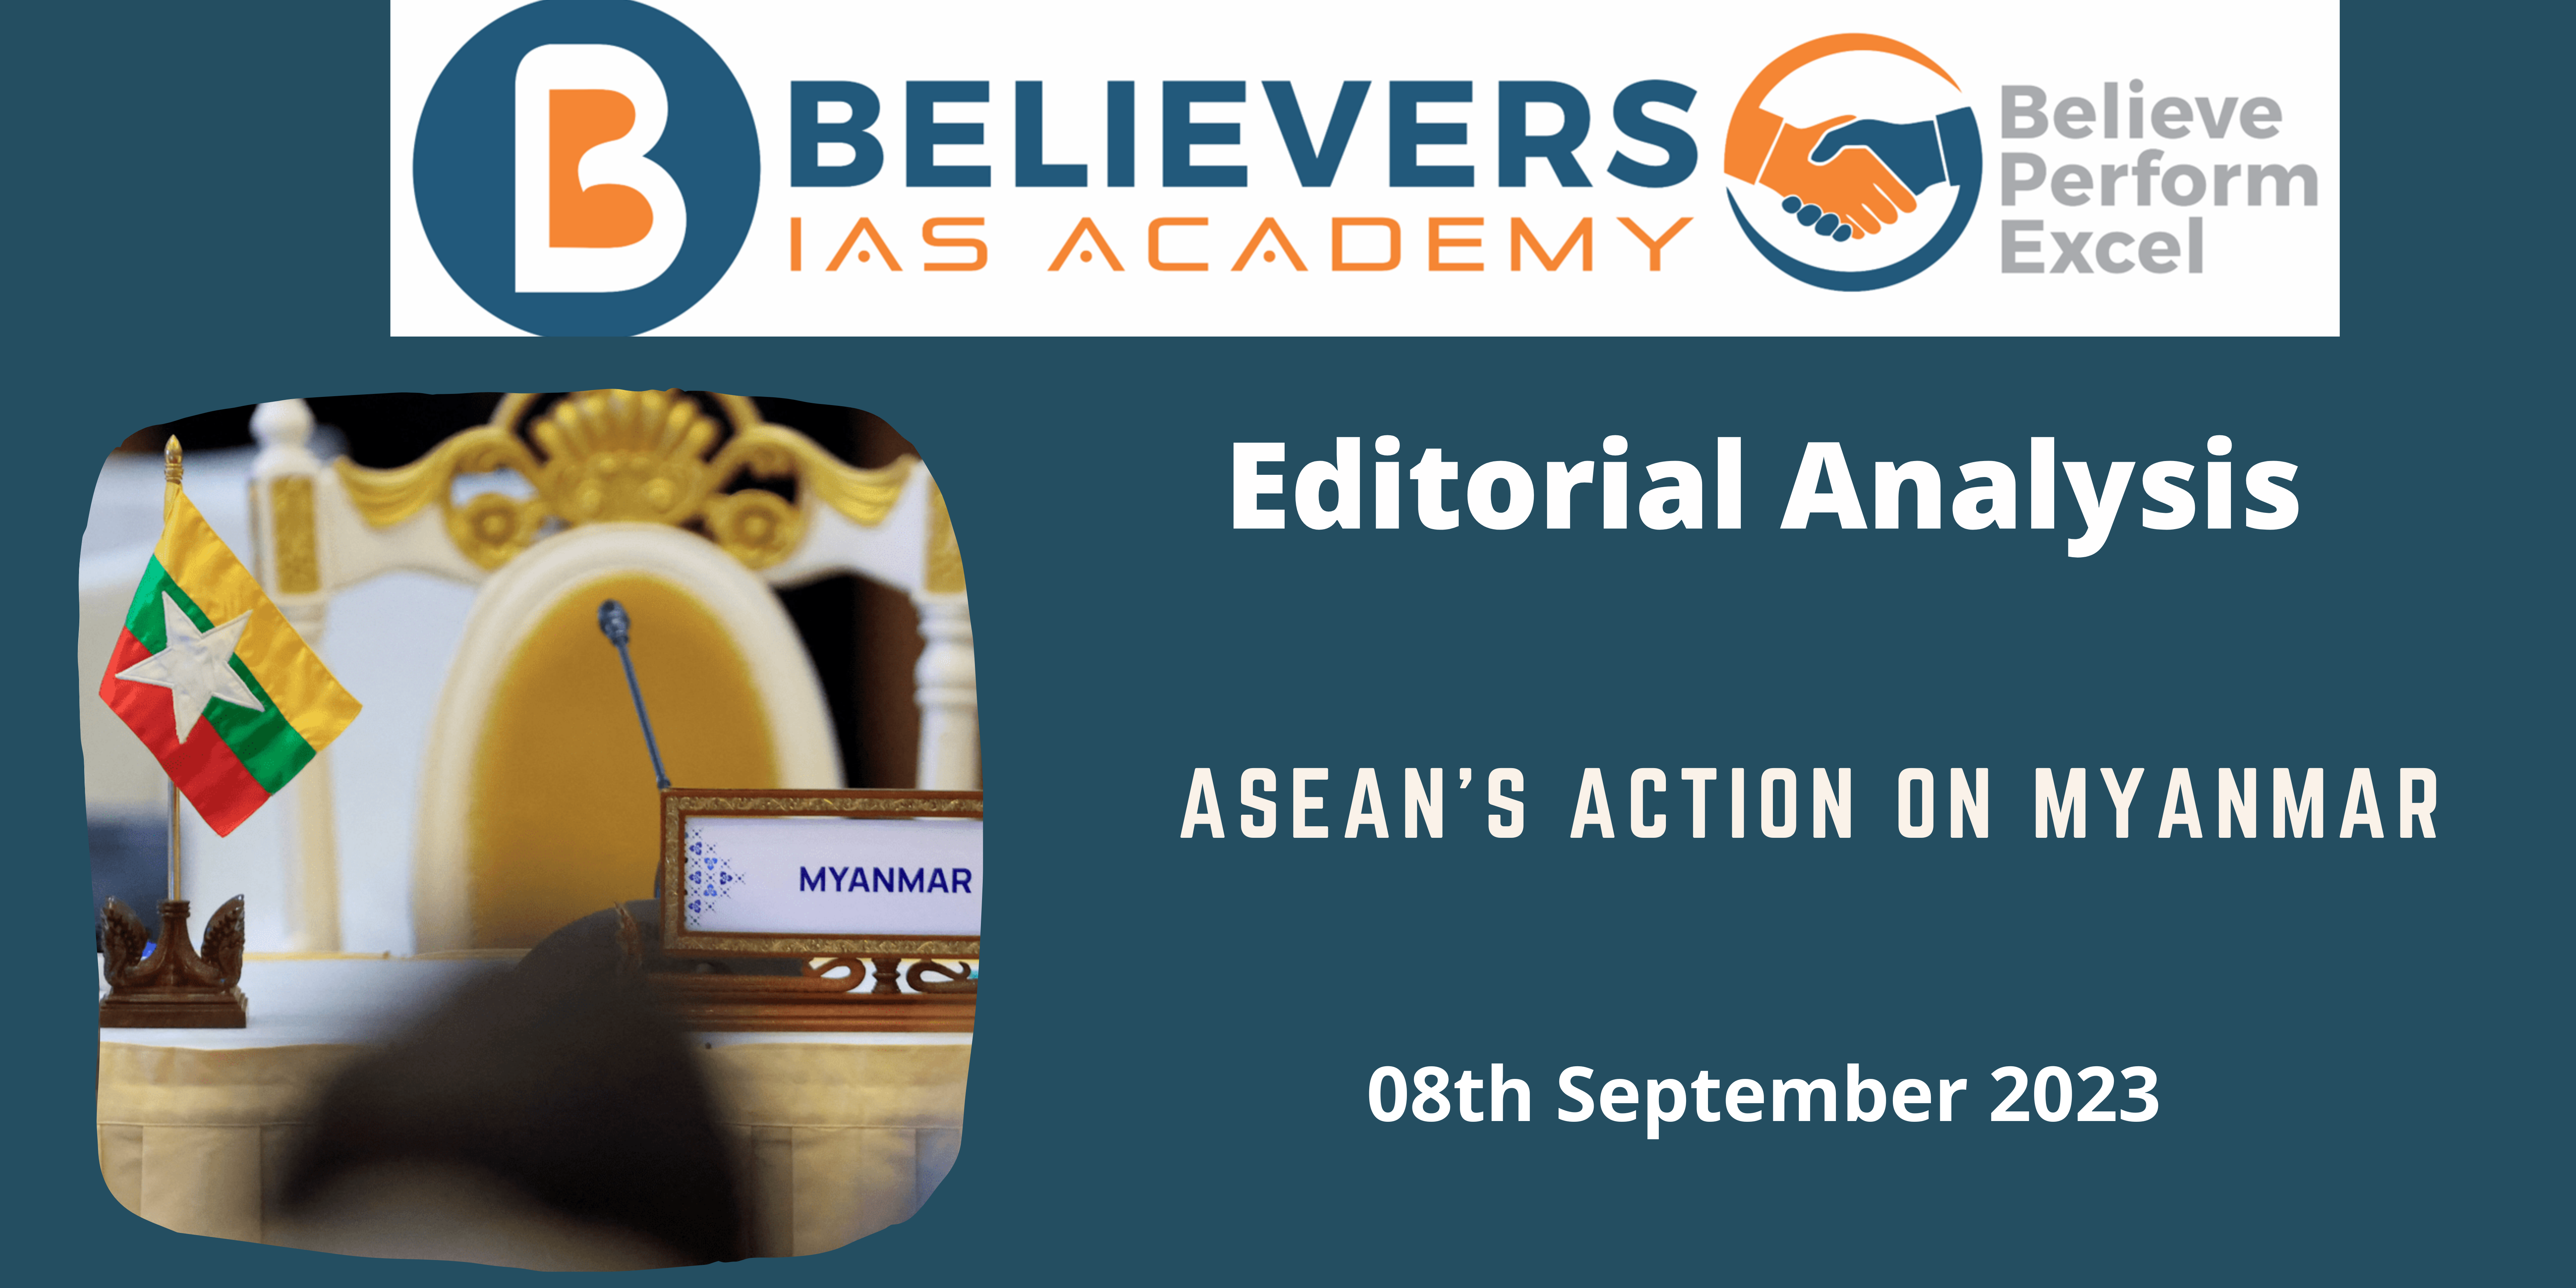 ASEAN's Action on Myanmar